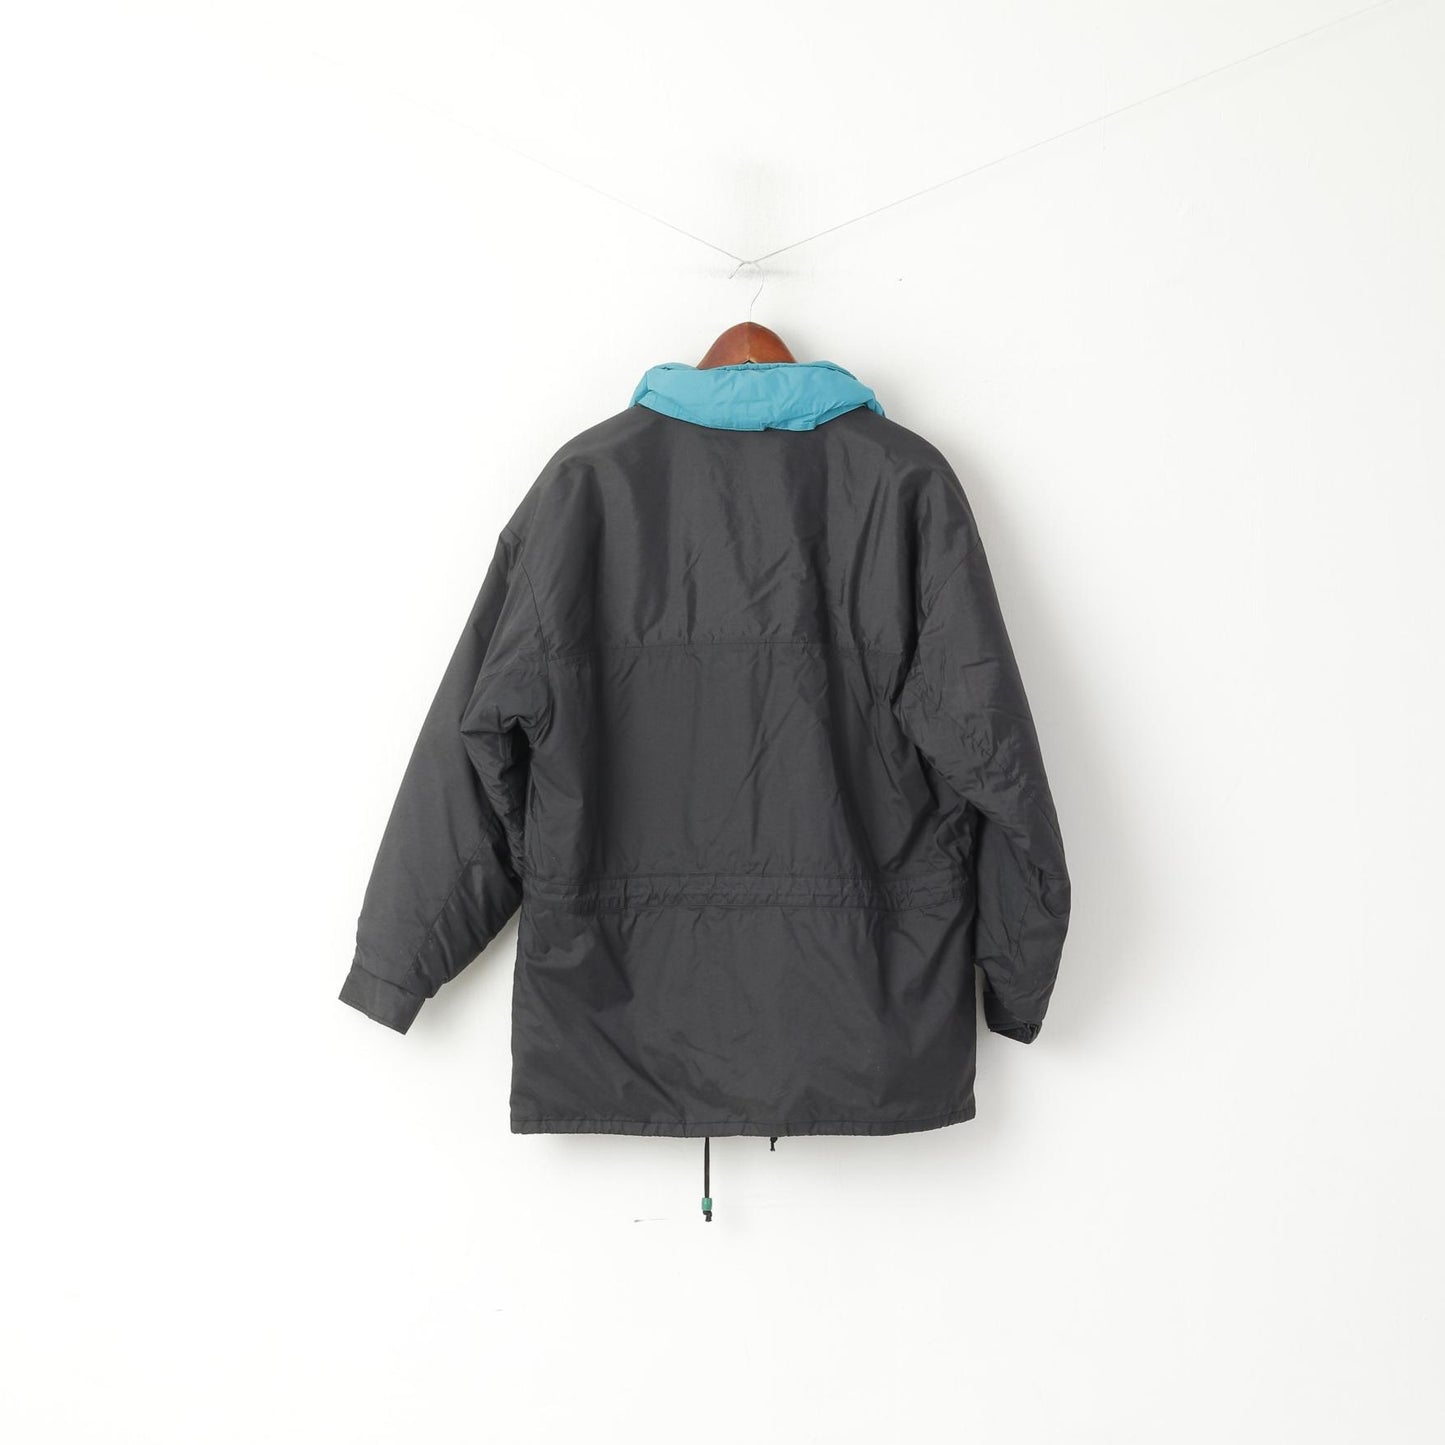 Karrimor Men M Jacket Grey Cyclone Nylon Padded Full Zipper Vintage Hidden Hood Top